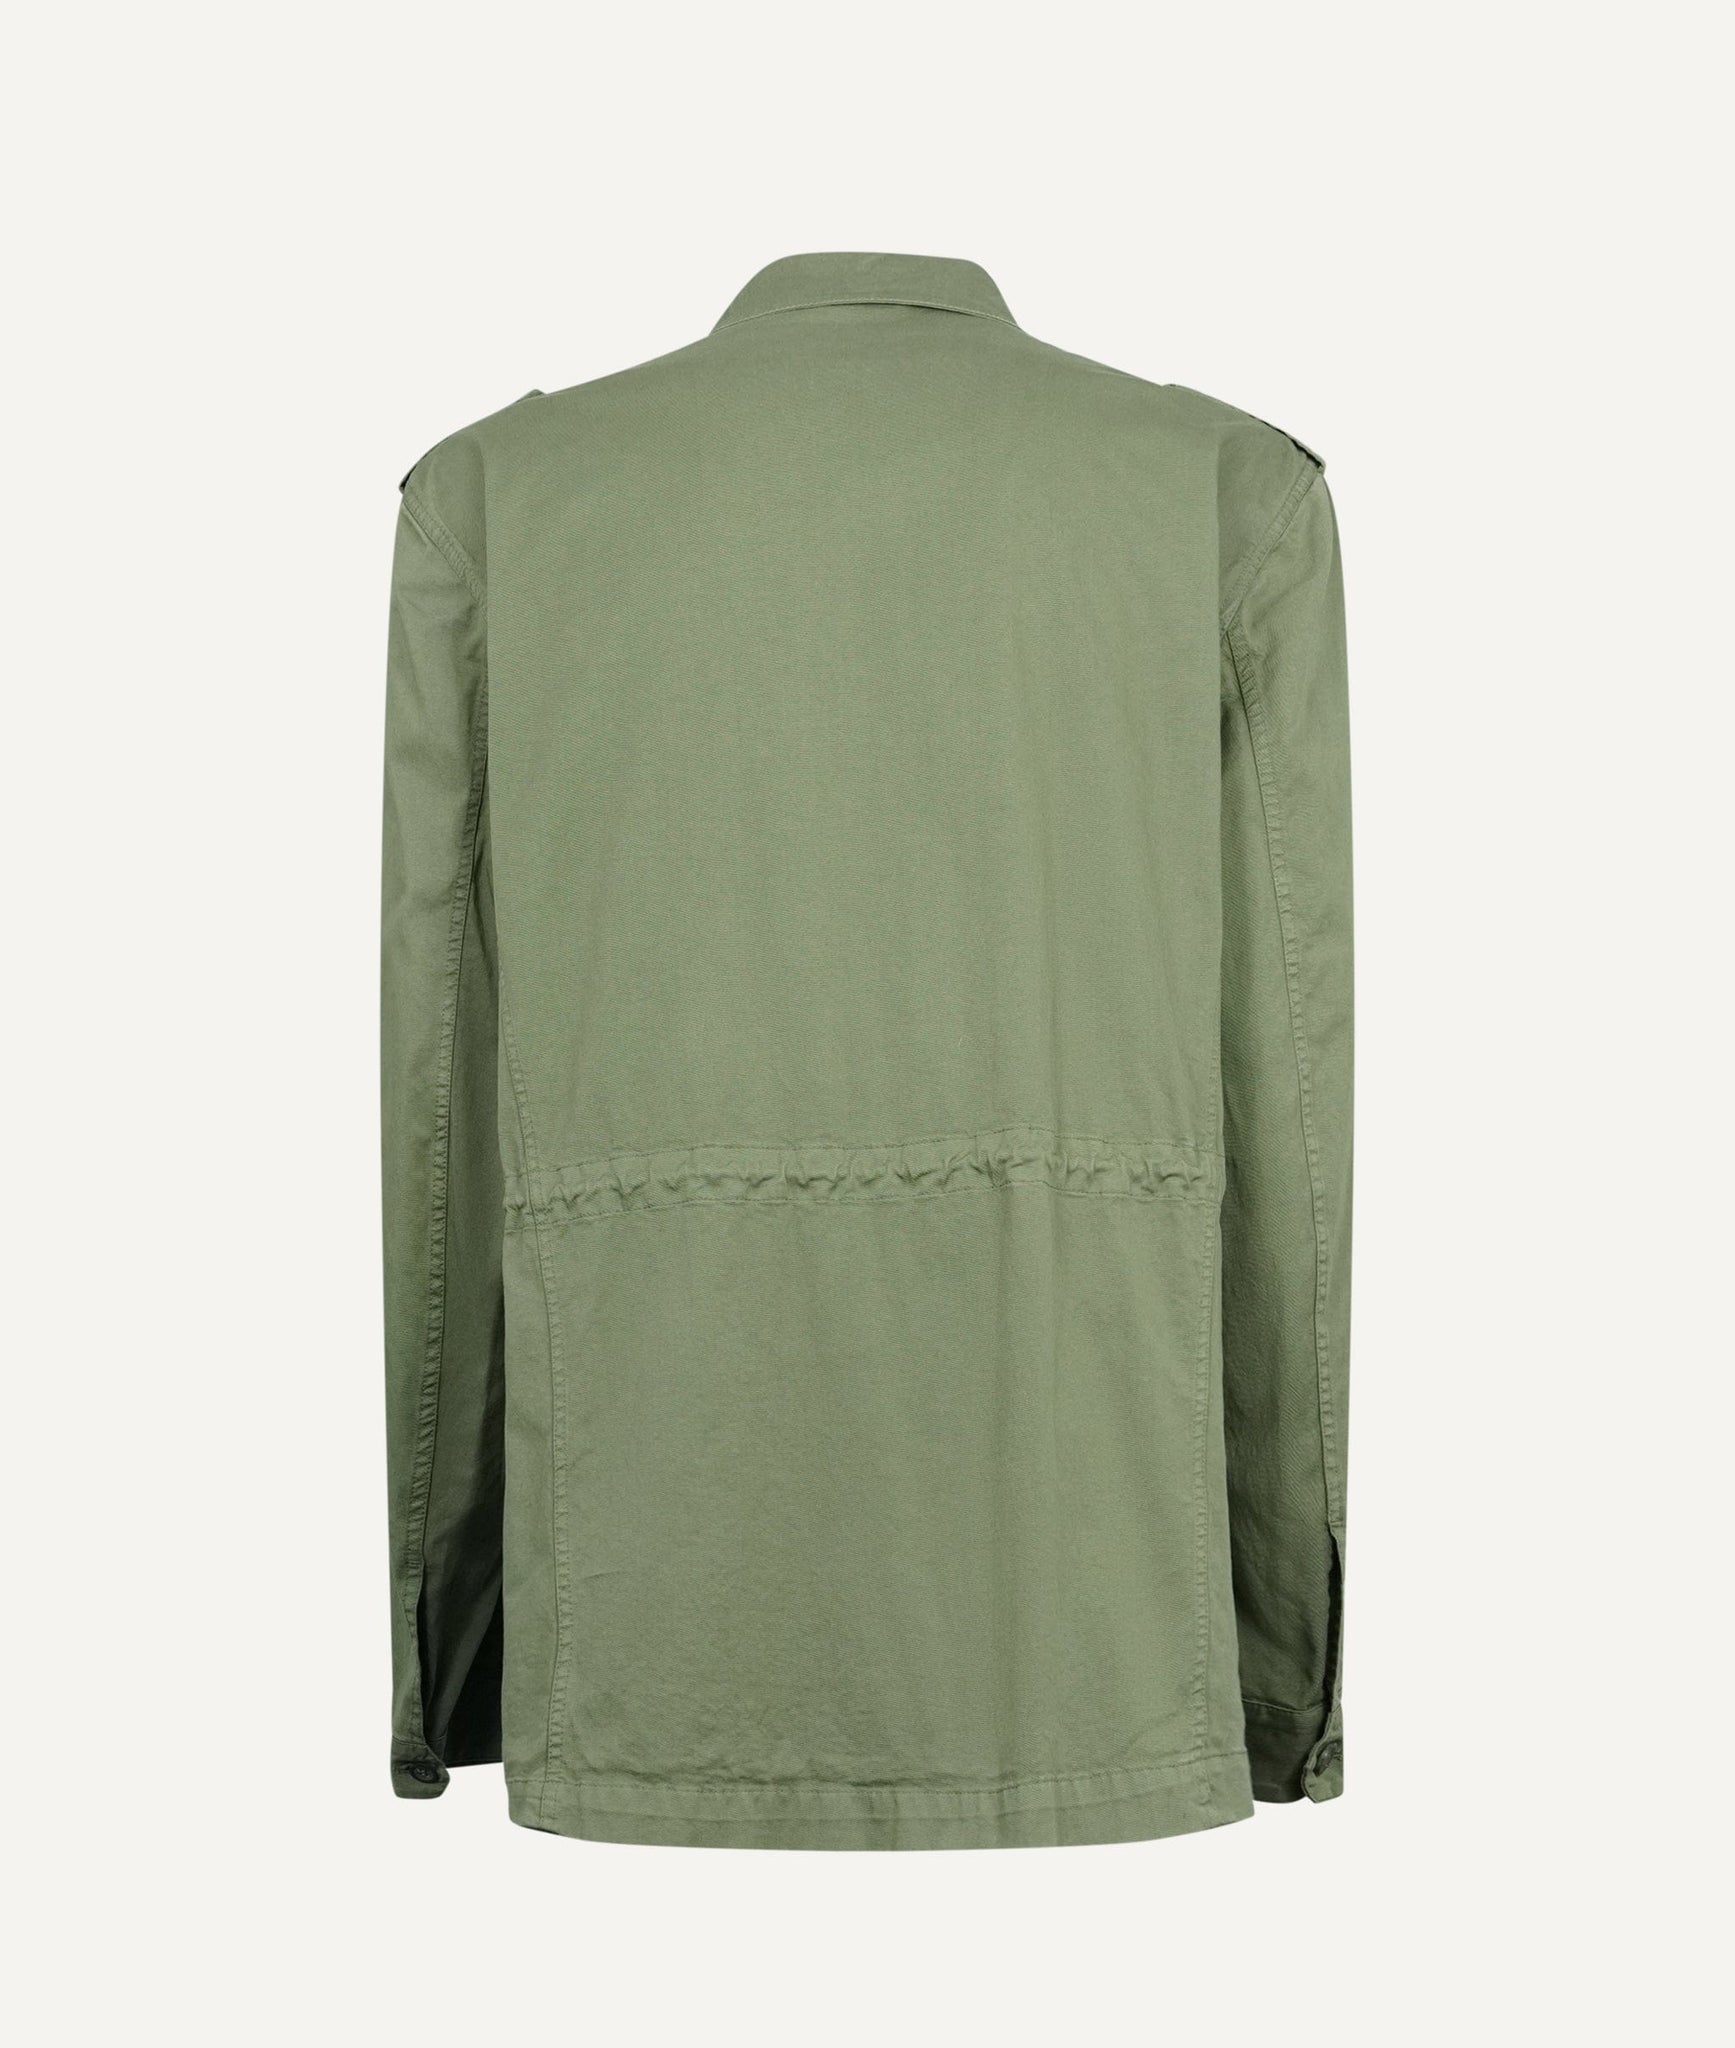 Malo - Safari Jacket in Cotton